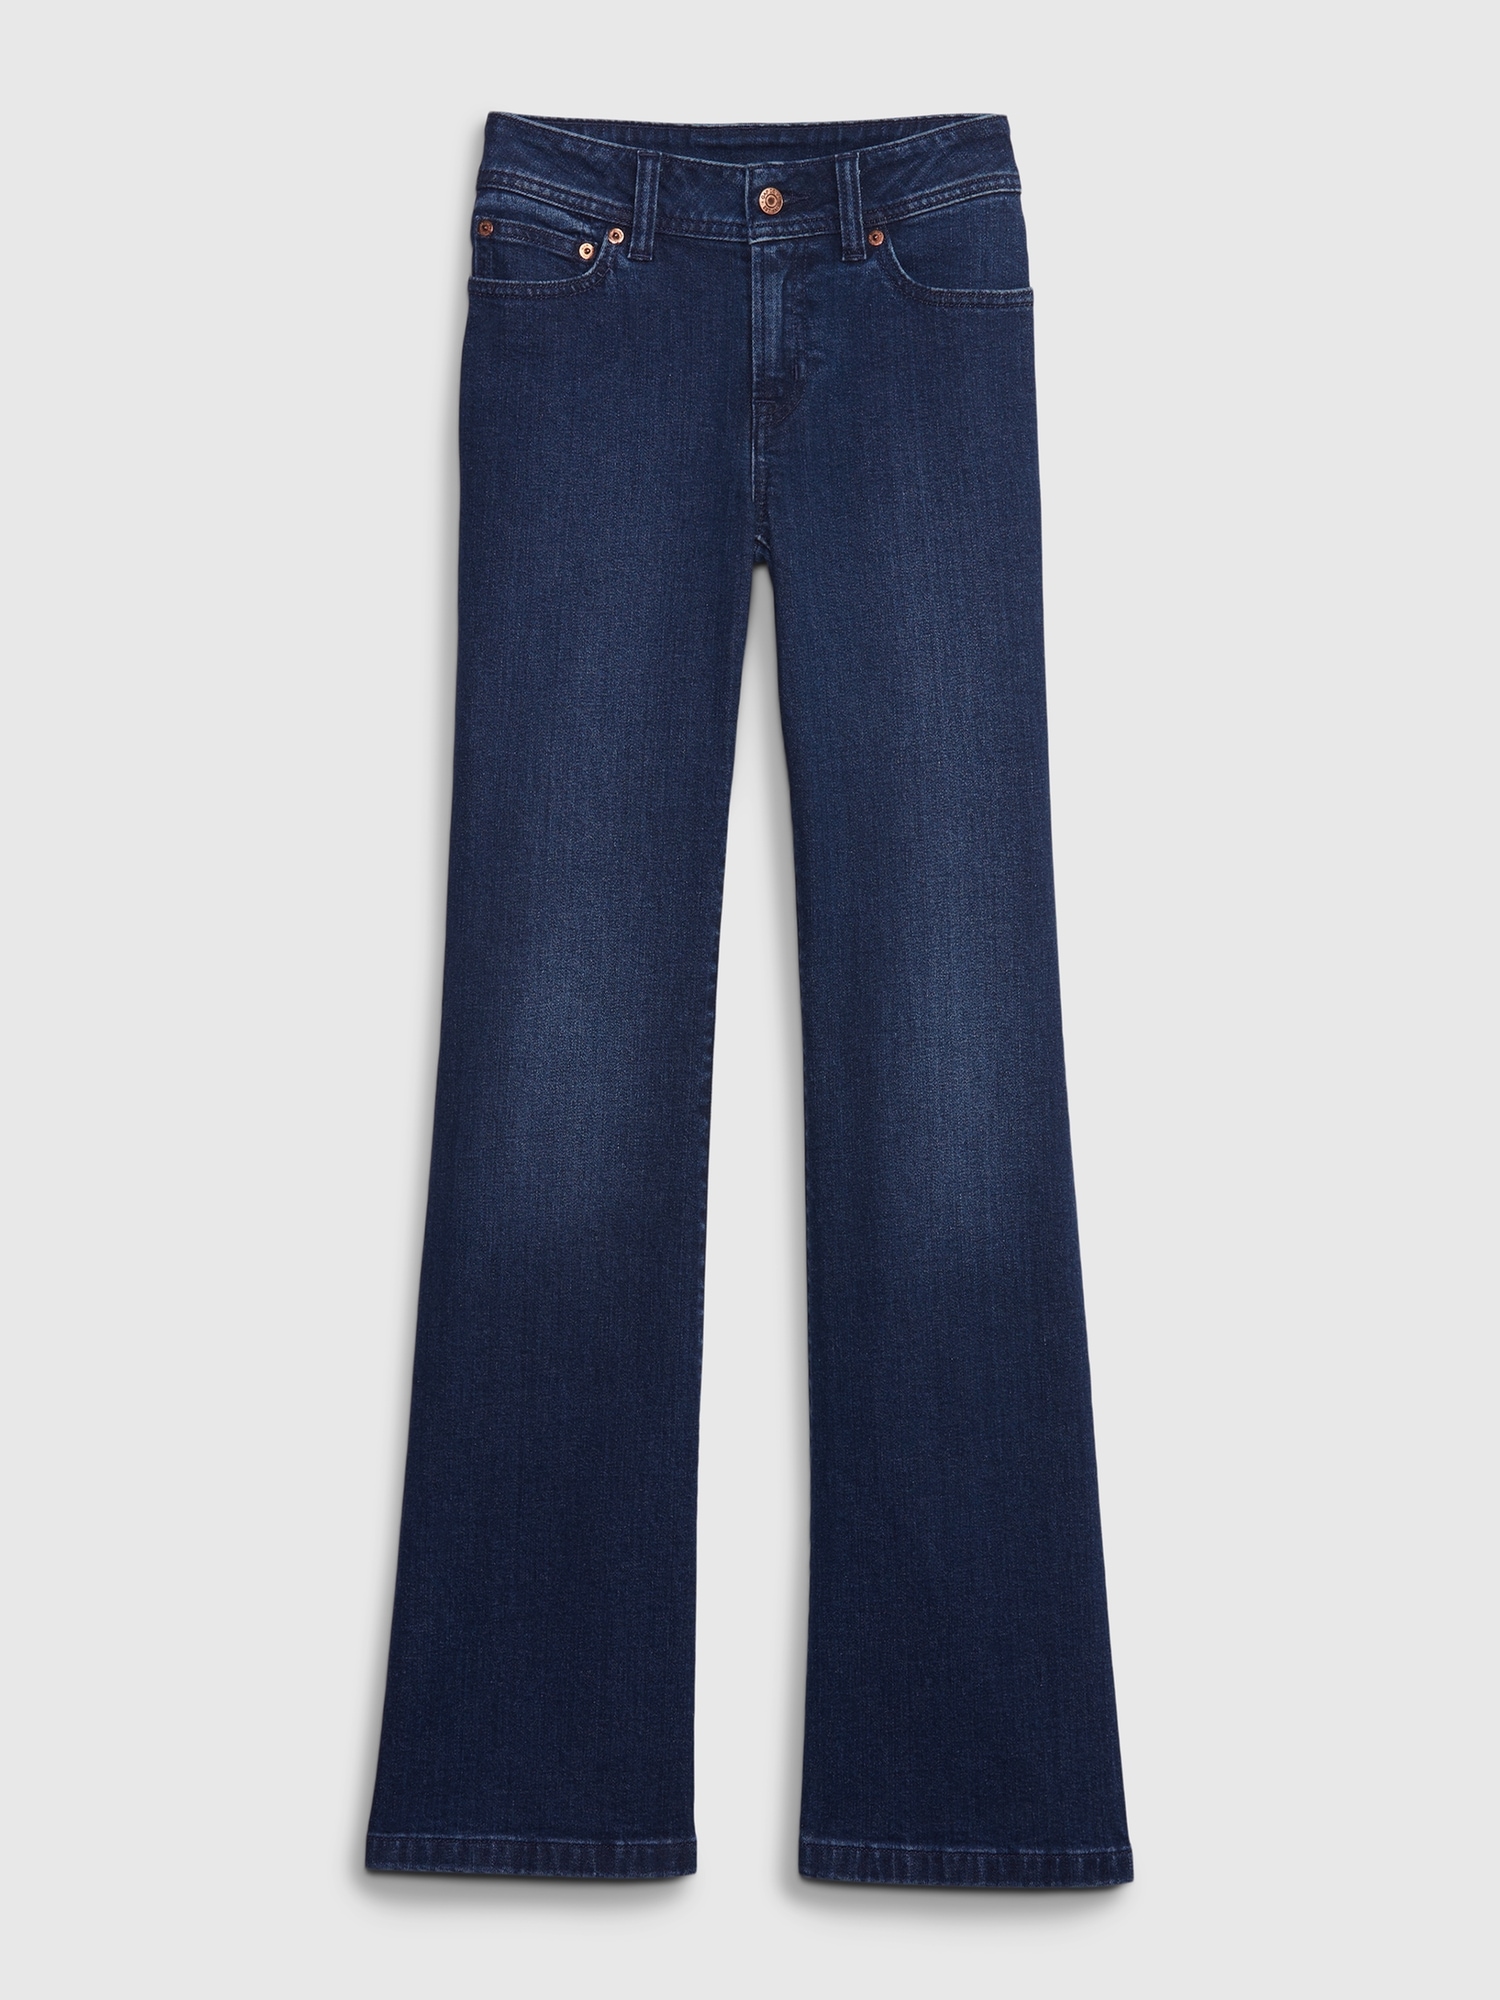 Hollister jeans, 👖 size 3S/ waist 26 / length 26, 👖